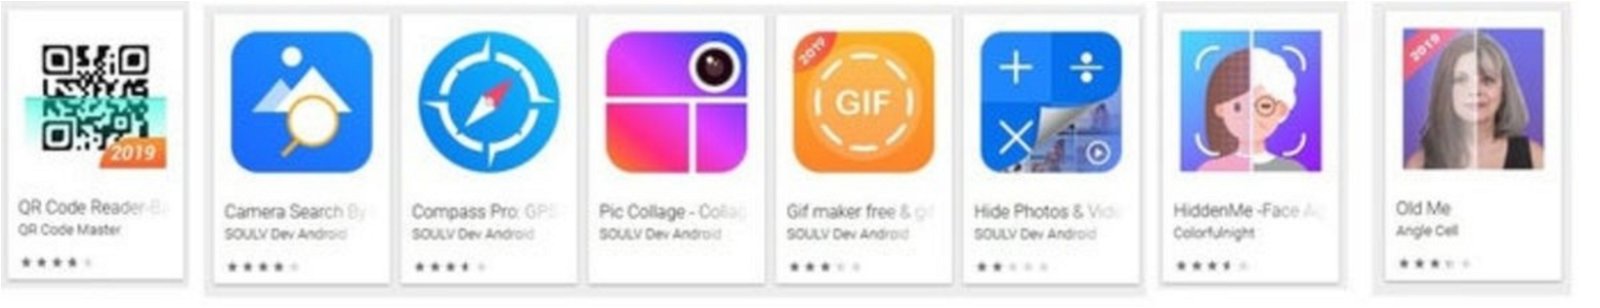 Apps fleeceware en la Play Store